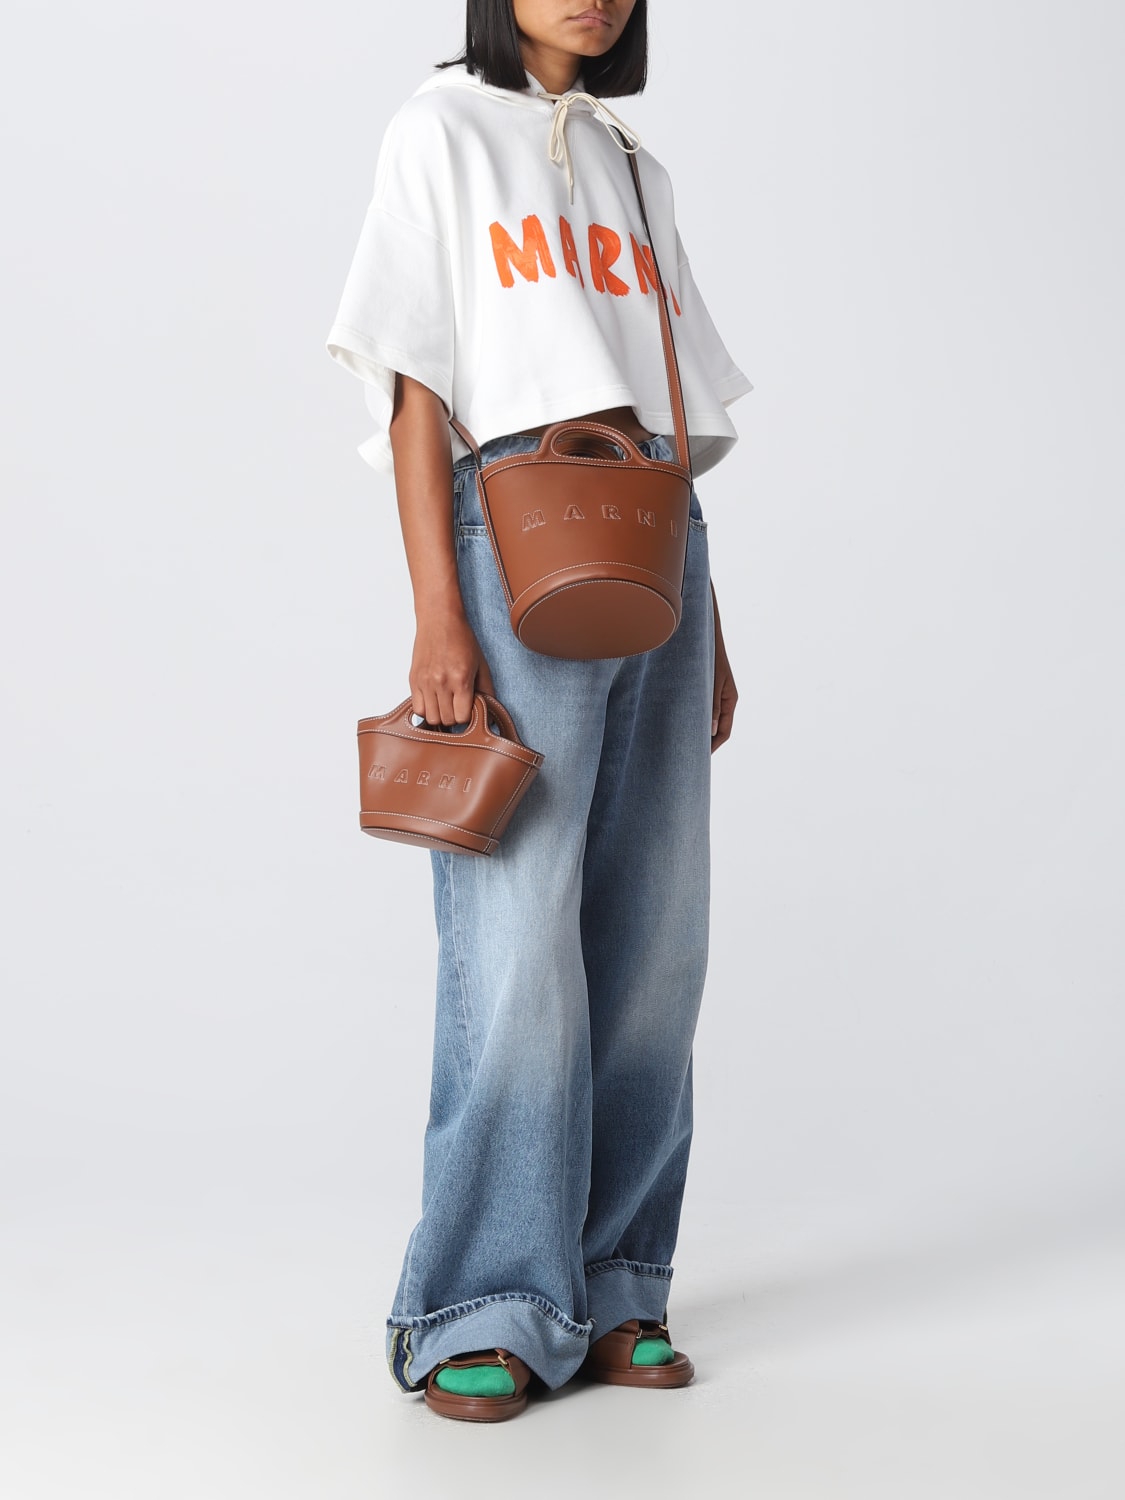 MARNI: Tropicalia bag in smooth leather - Brown | Marni mini bag